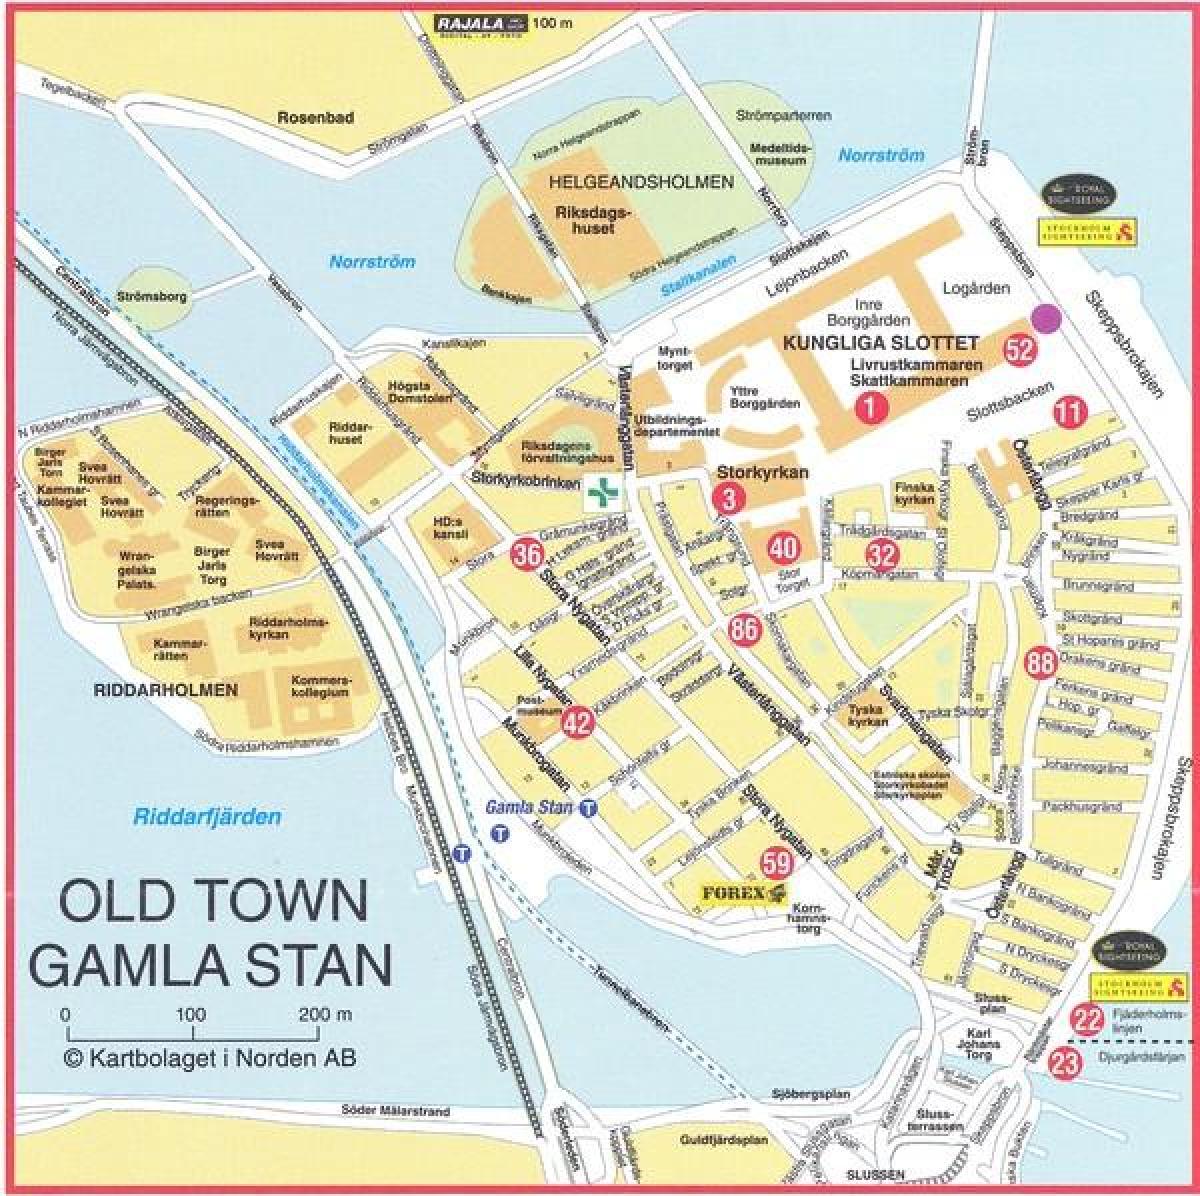 peta kota tua Stockholm Swedia